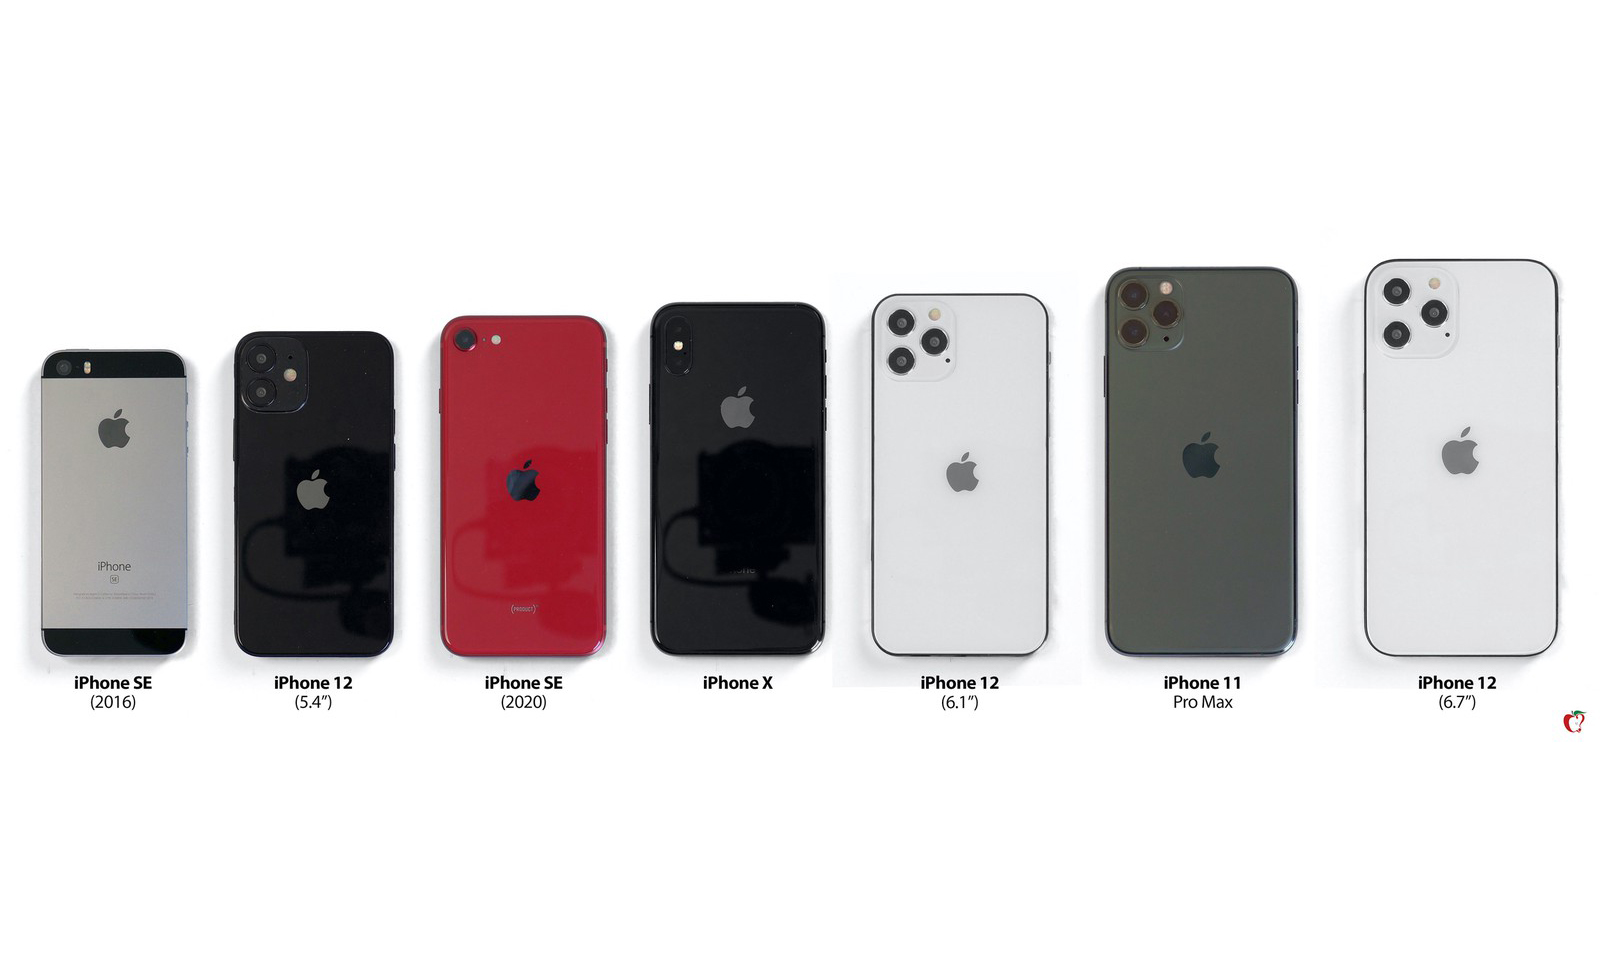 iphone 12 versions comparison